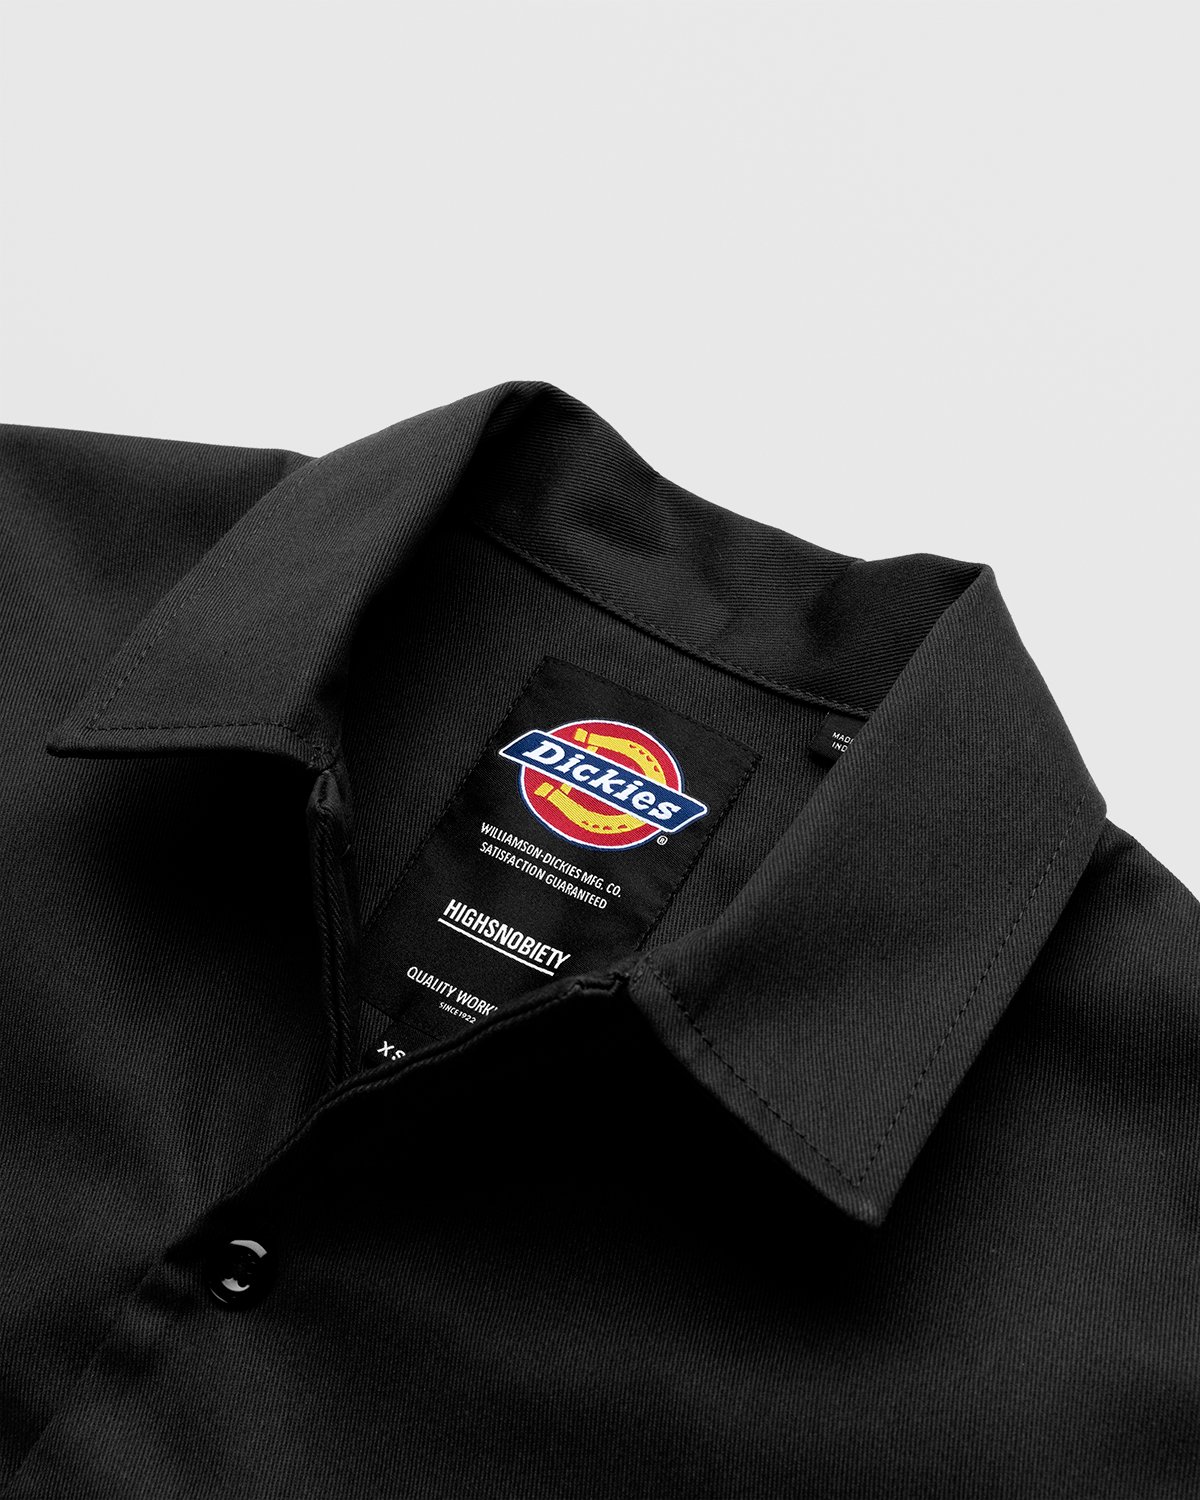 Highsnobiety x Dickies - Service Shirt Black - Clothing - Black - Image 3